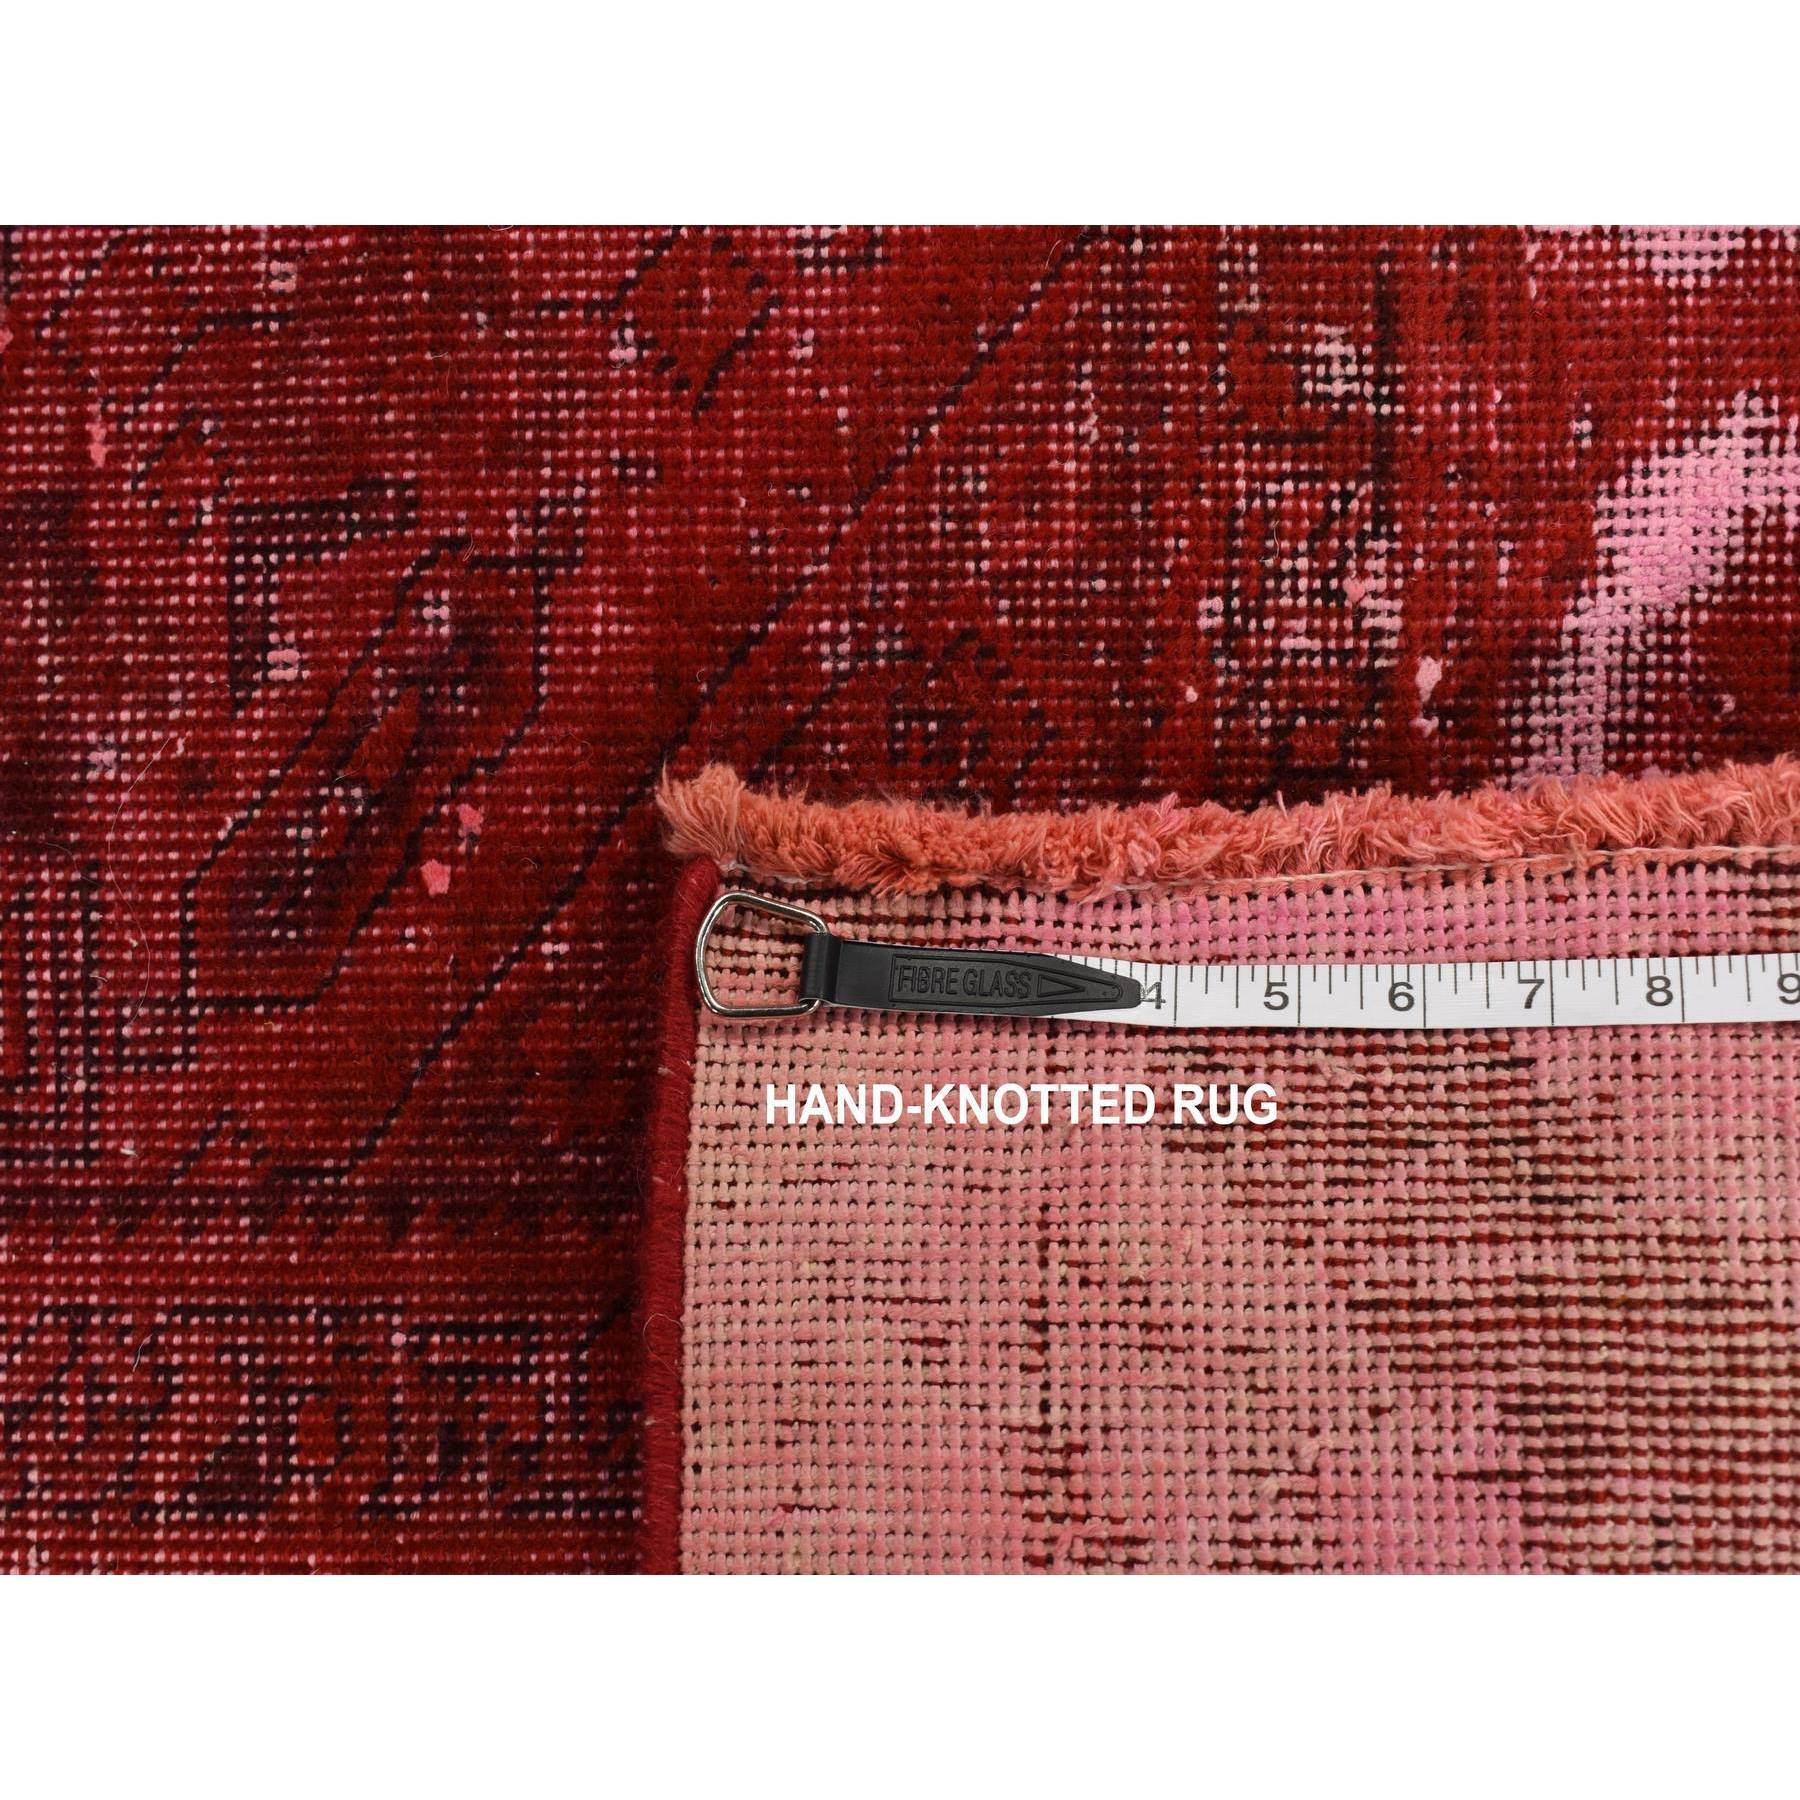 8'x11'2" Barn Red, Overdyed Vintage Persian Tabriz Barjasta, Hand Woven, Pure Wool, Oriental Rug 